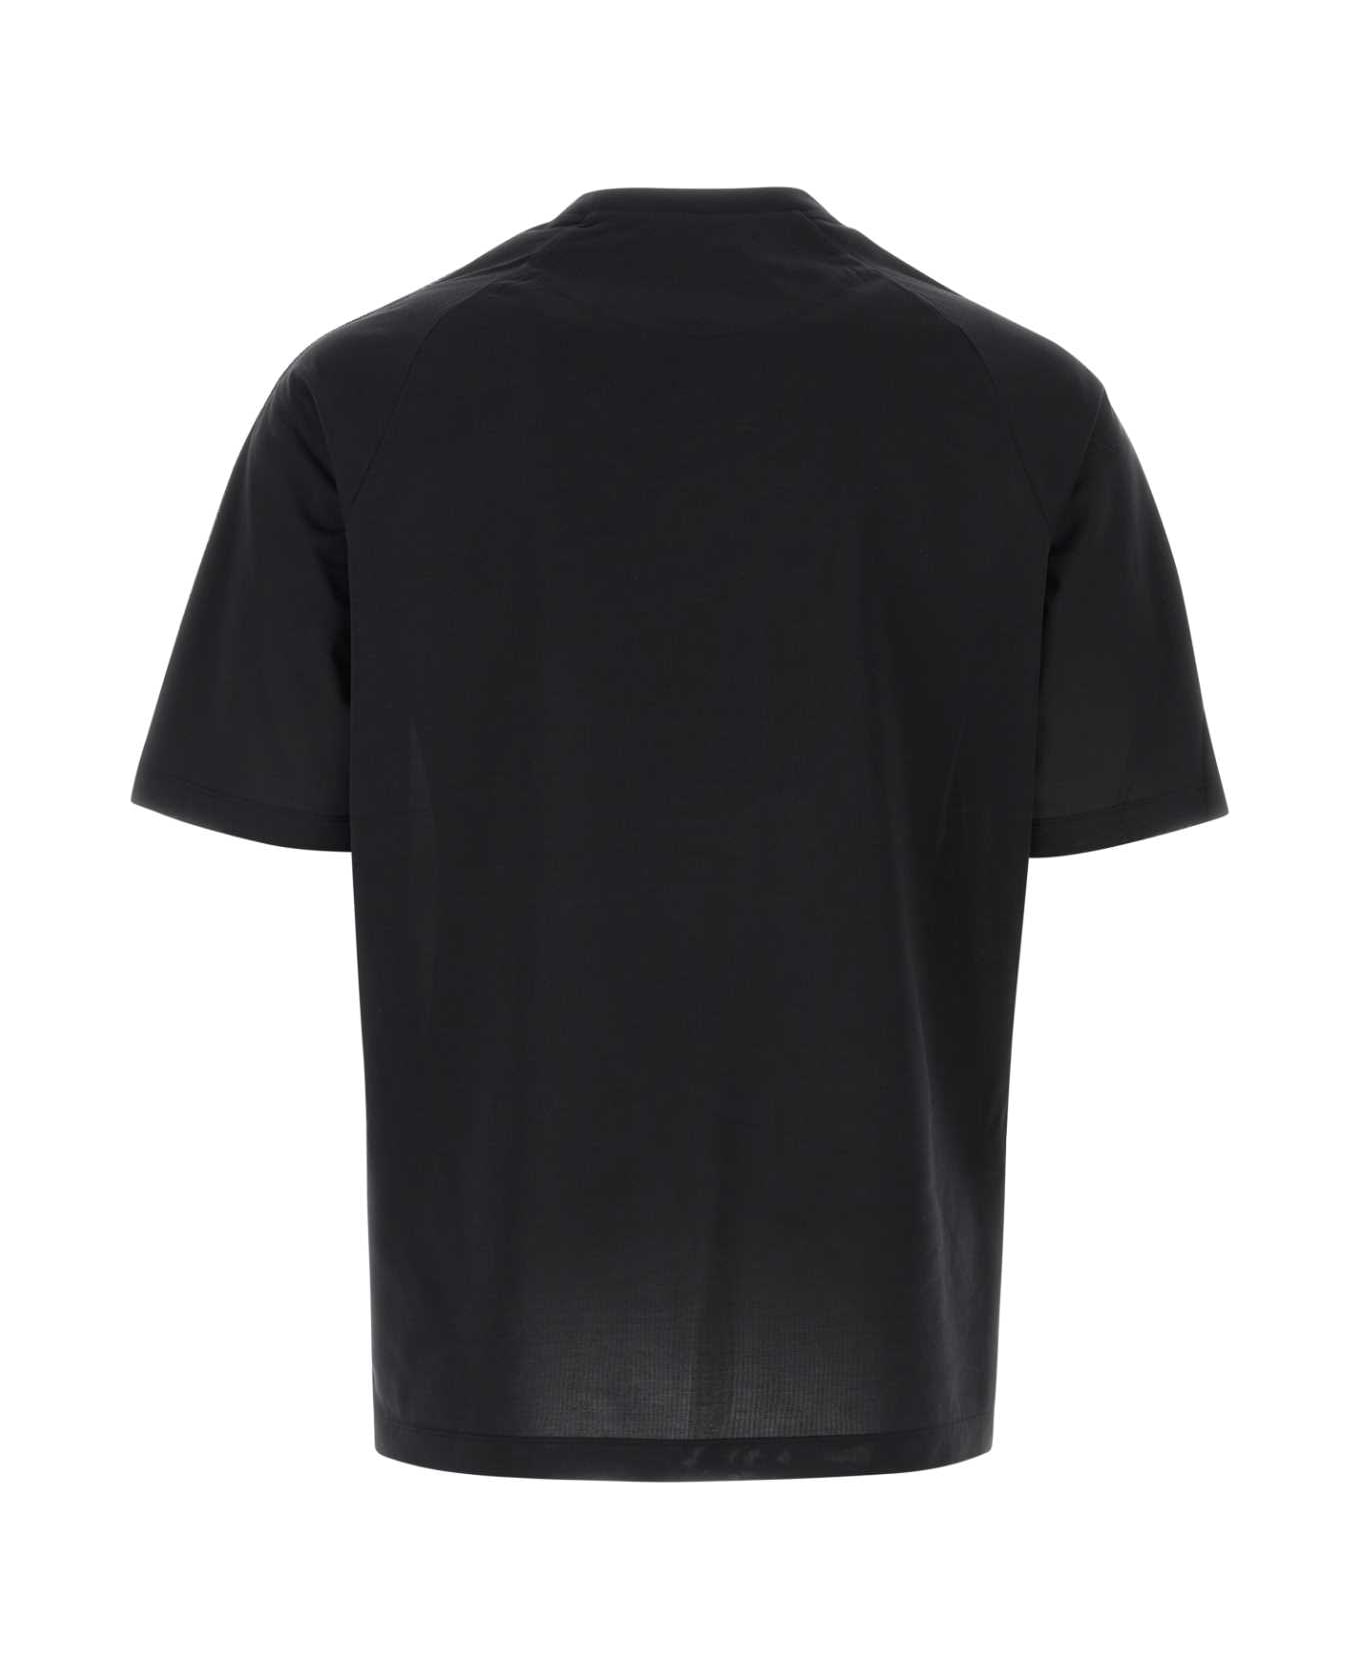 Y-3 Black Cotton Blend Oversize T-shirt - BLACKOFFWHITE